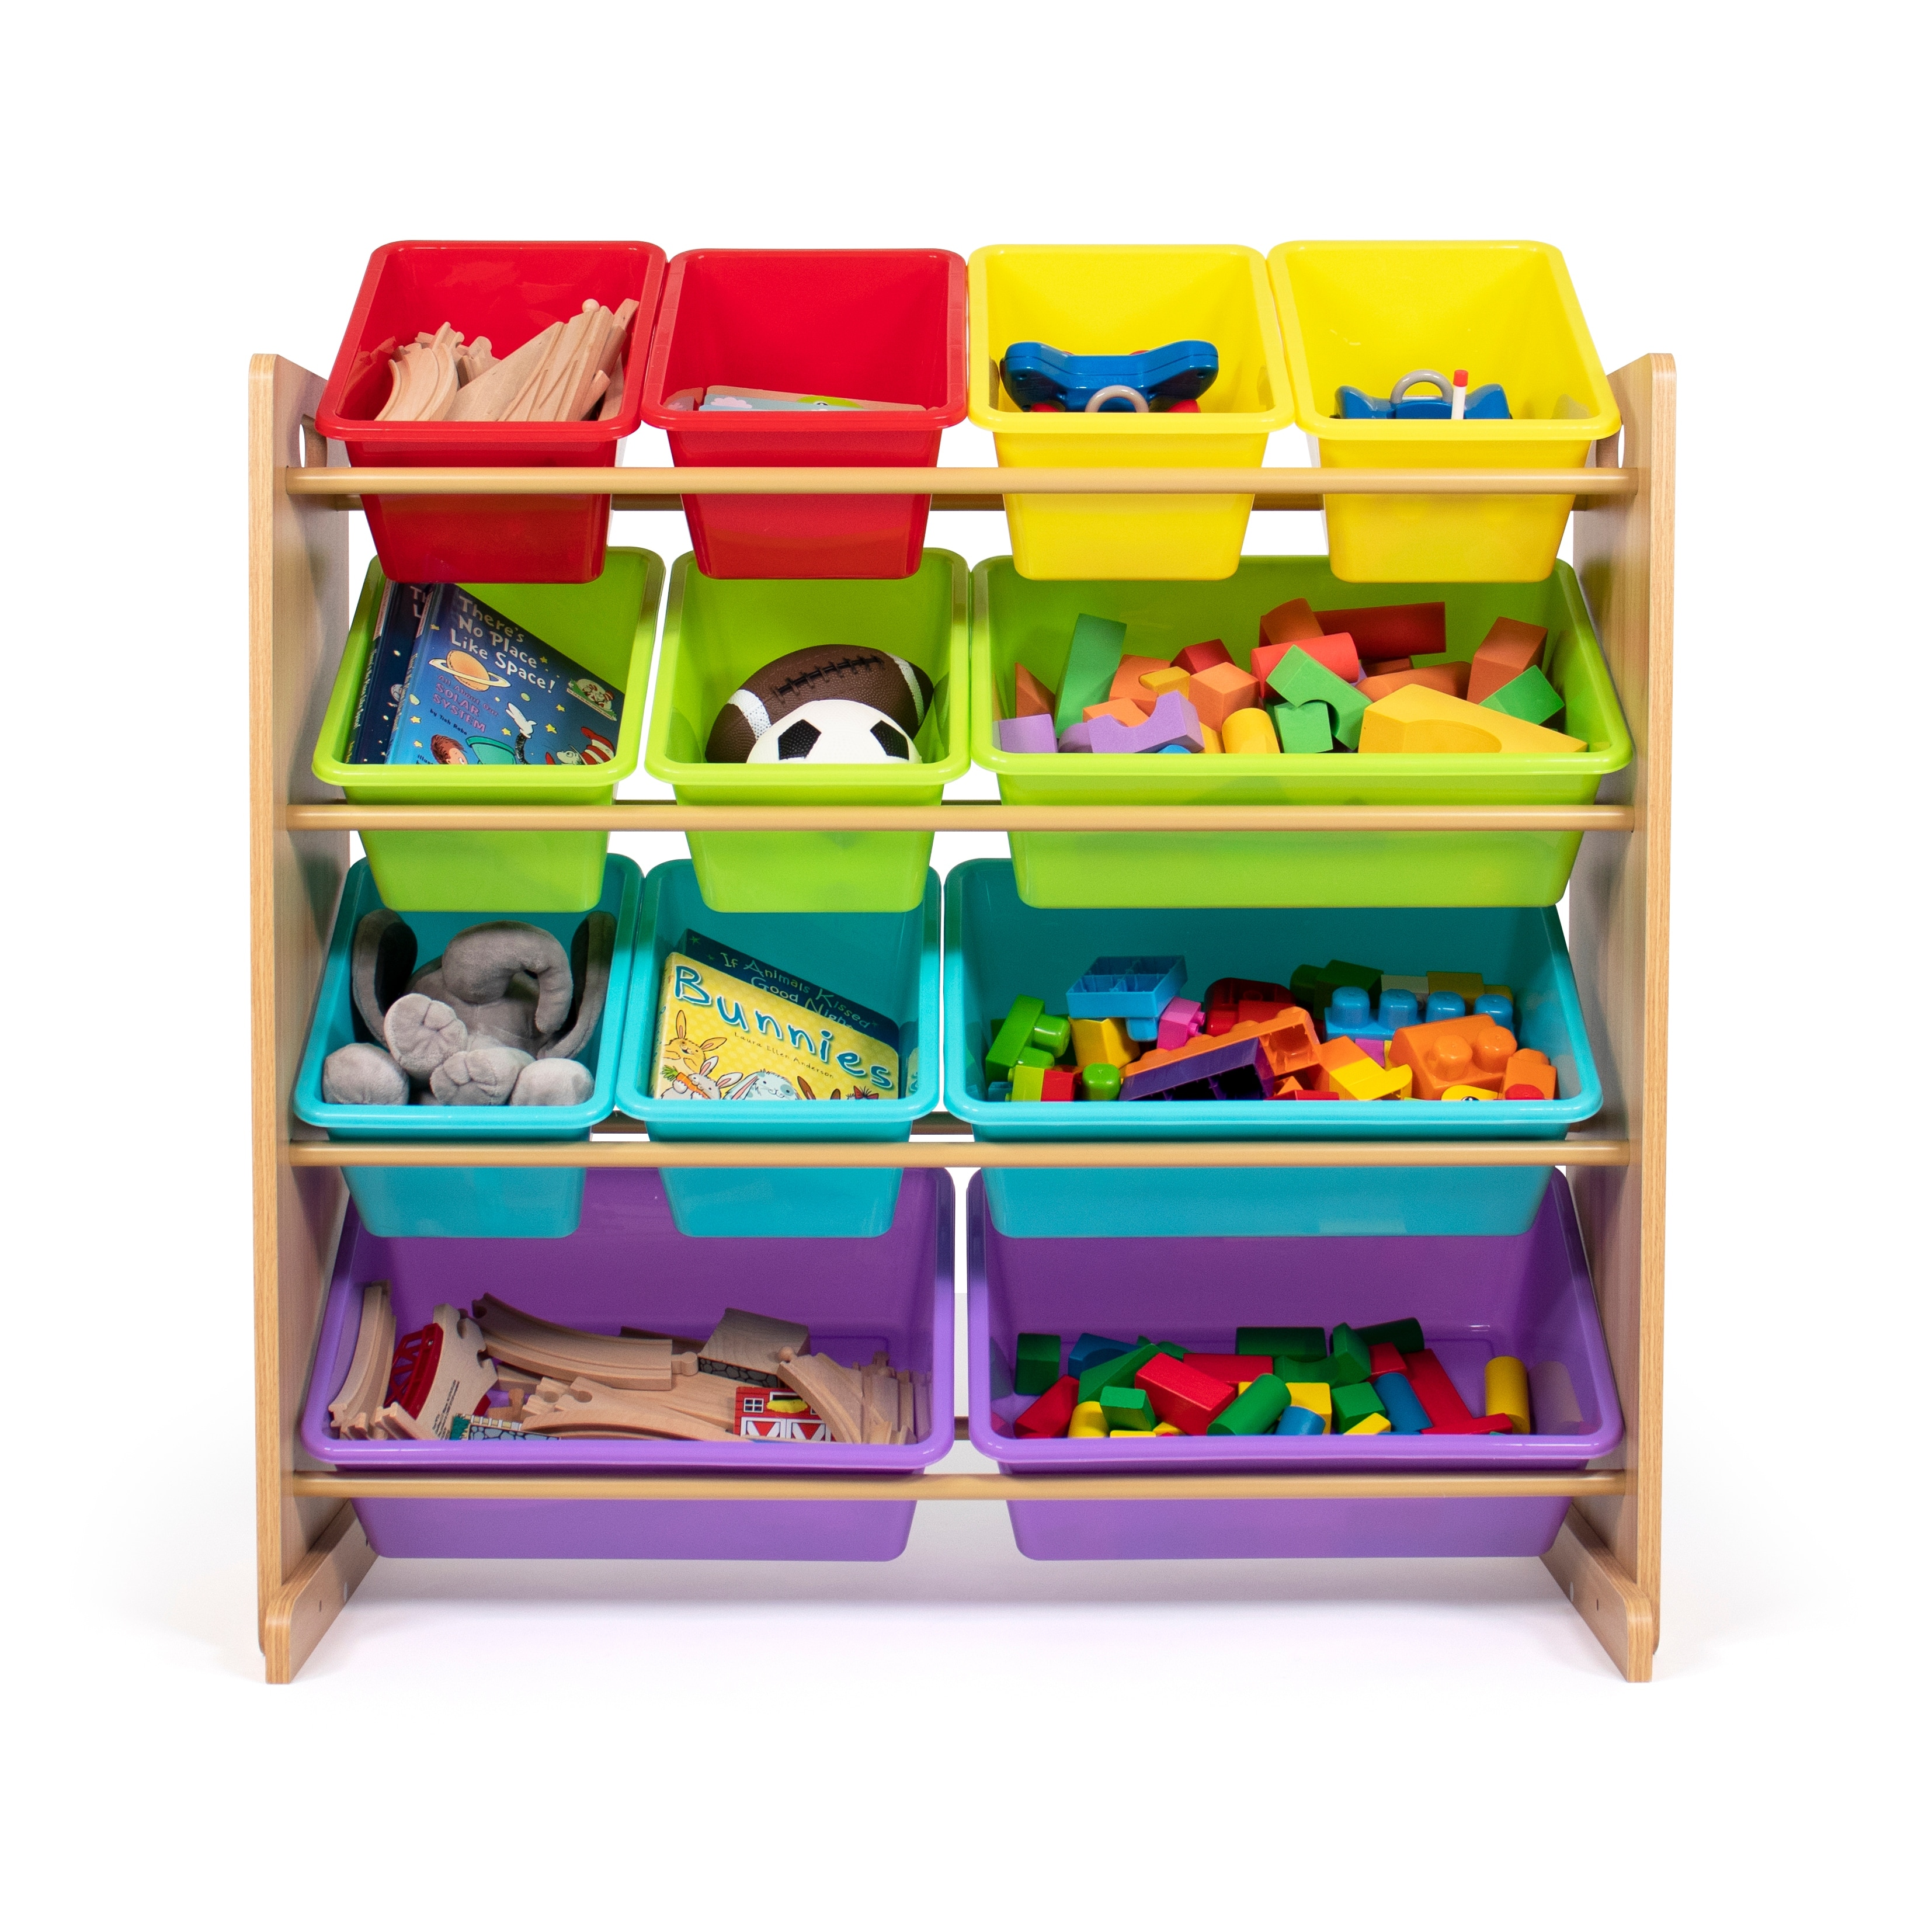 https://ak1.ostkcdn.com/images/products/is/images/direct/4c87a1c863ac200ce05bba656b20c7fa48a26024/Rainbow-Kids-Toy-Storage-Organizer-with-12-Storage-Bins.jpg